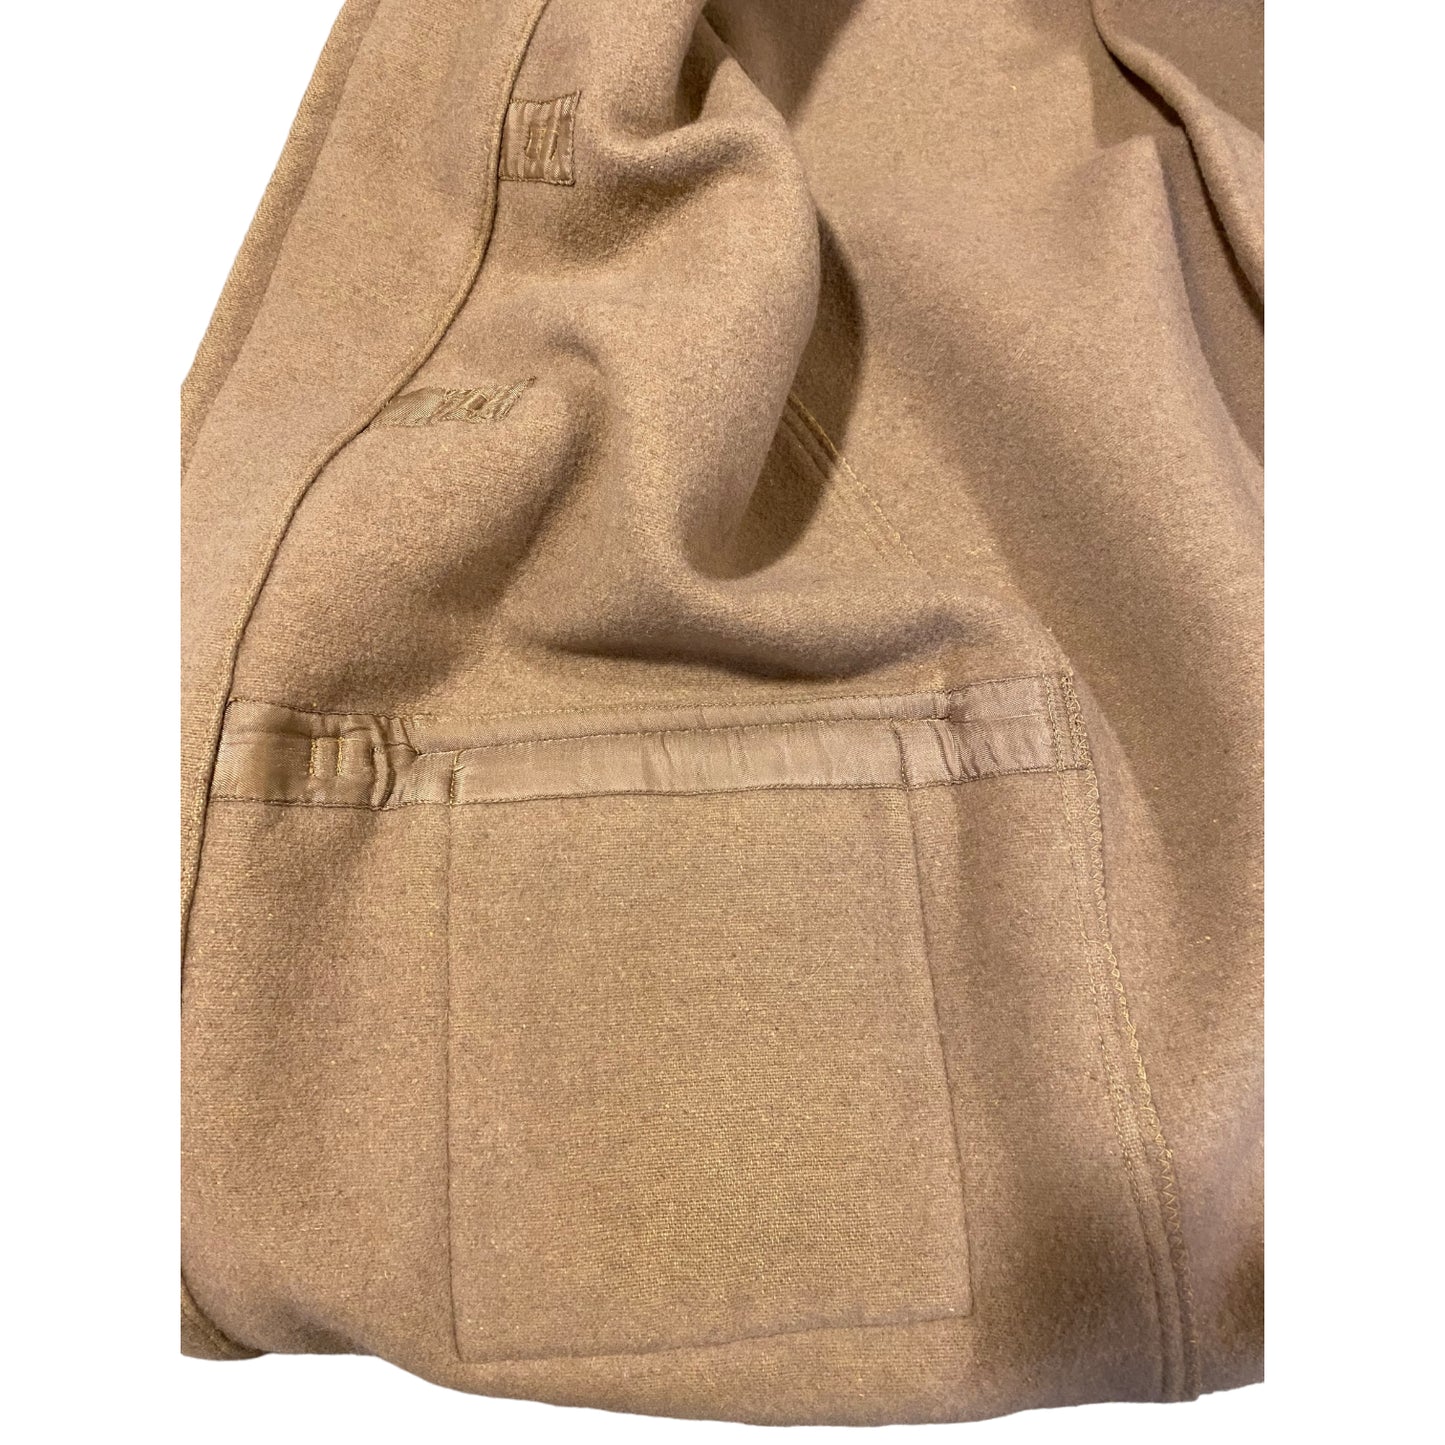 Vintage Caulfeild Wool Duffel Coat Camel Colour Cargo Patch Pockets Size Large